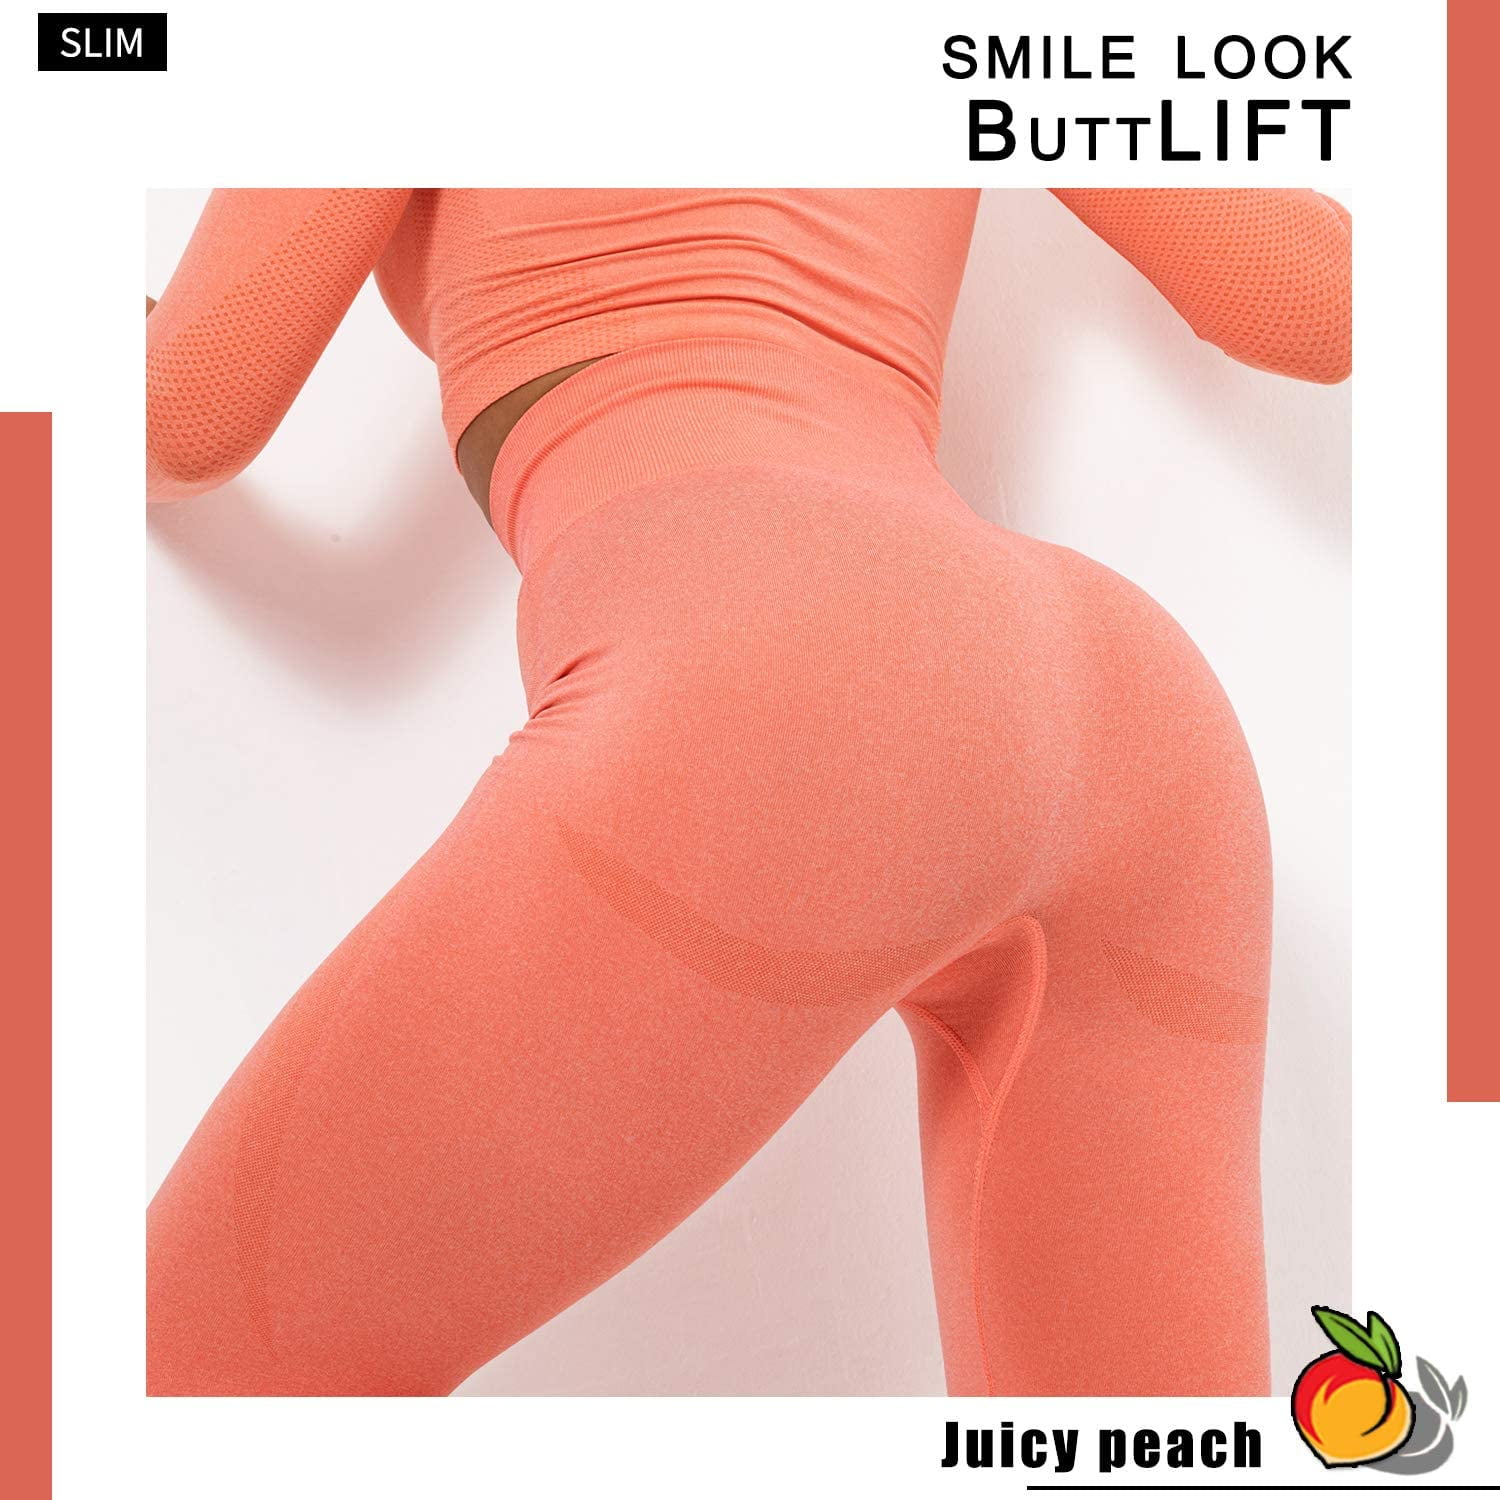 OzalCtree Nude High Waist Yoga Pants Women's Fitness Running Skinny Leggings  Gym Exercise Hip Lift Pants with Pockets Clip Hip Leggings